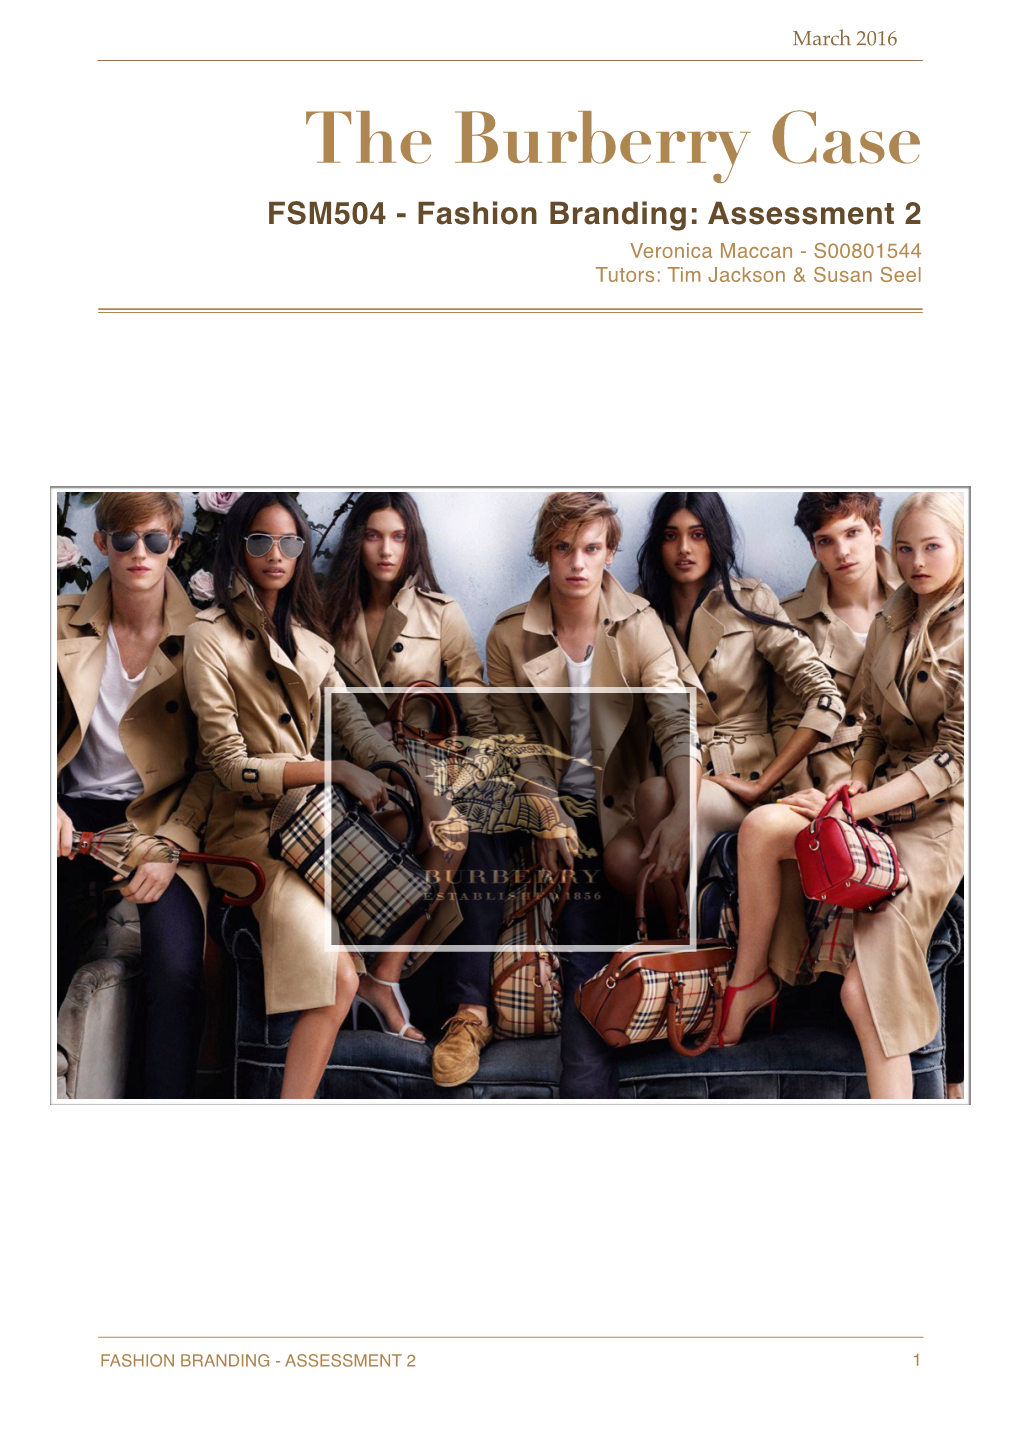 Fashion Branding- Burberry